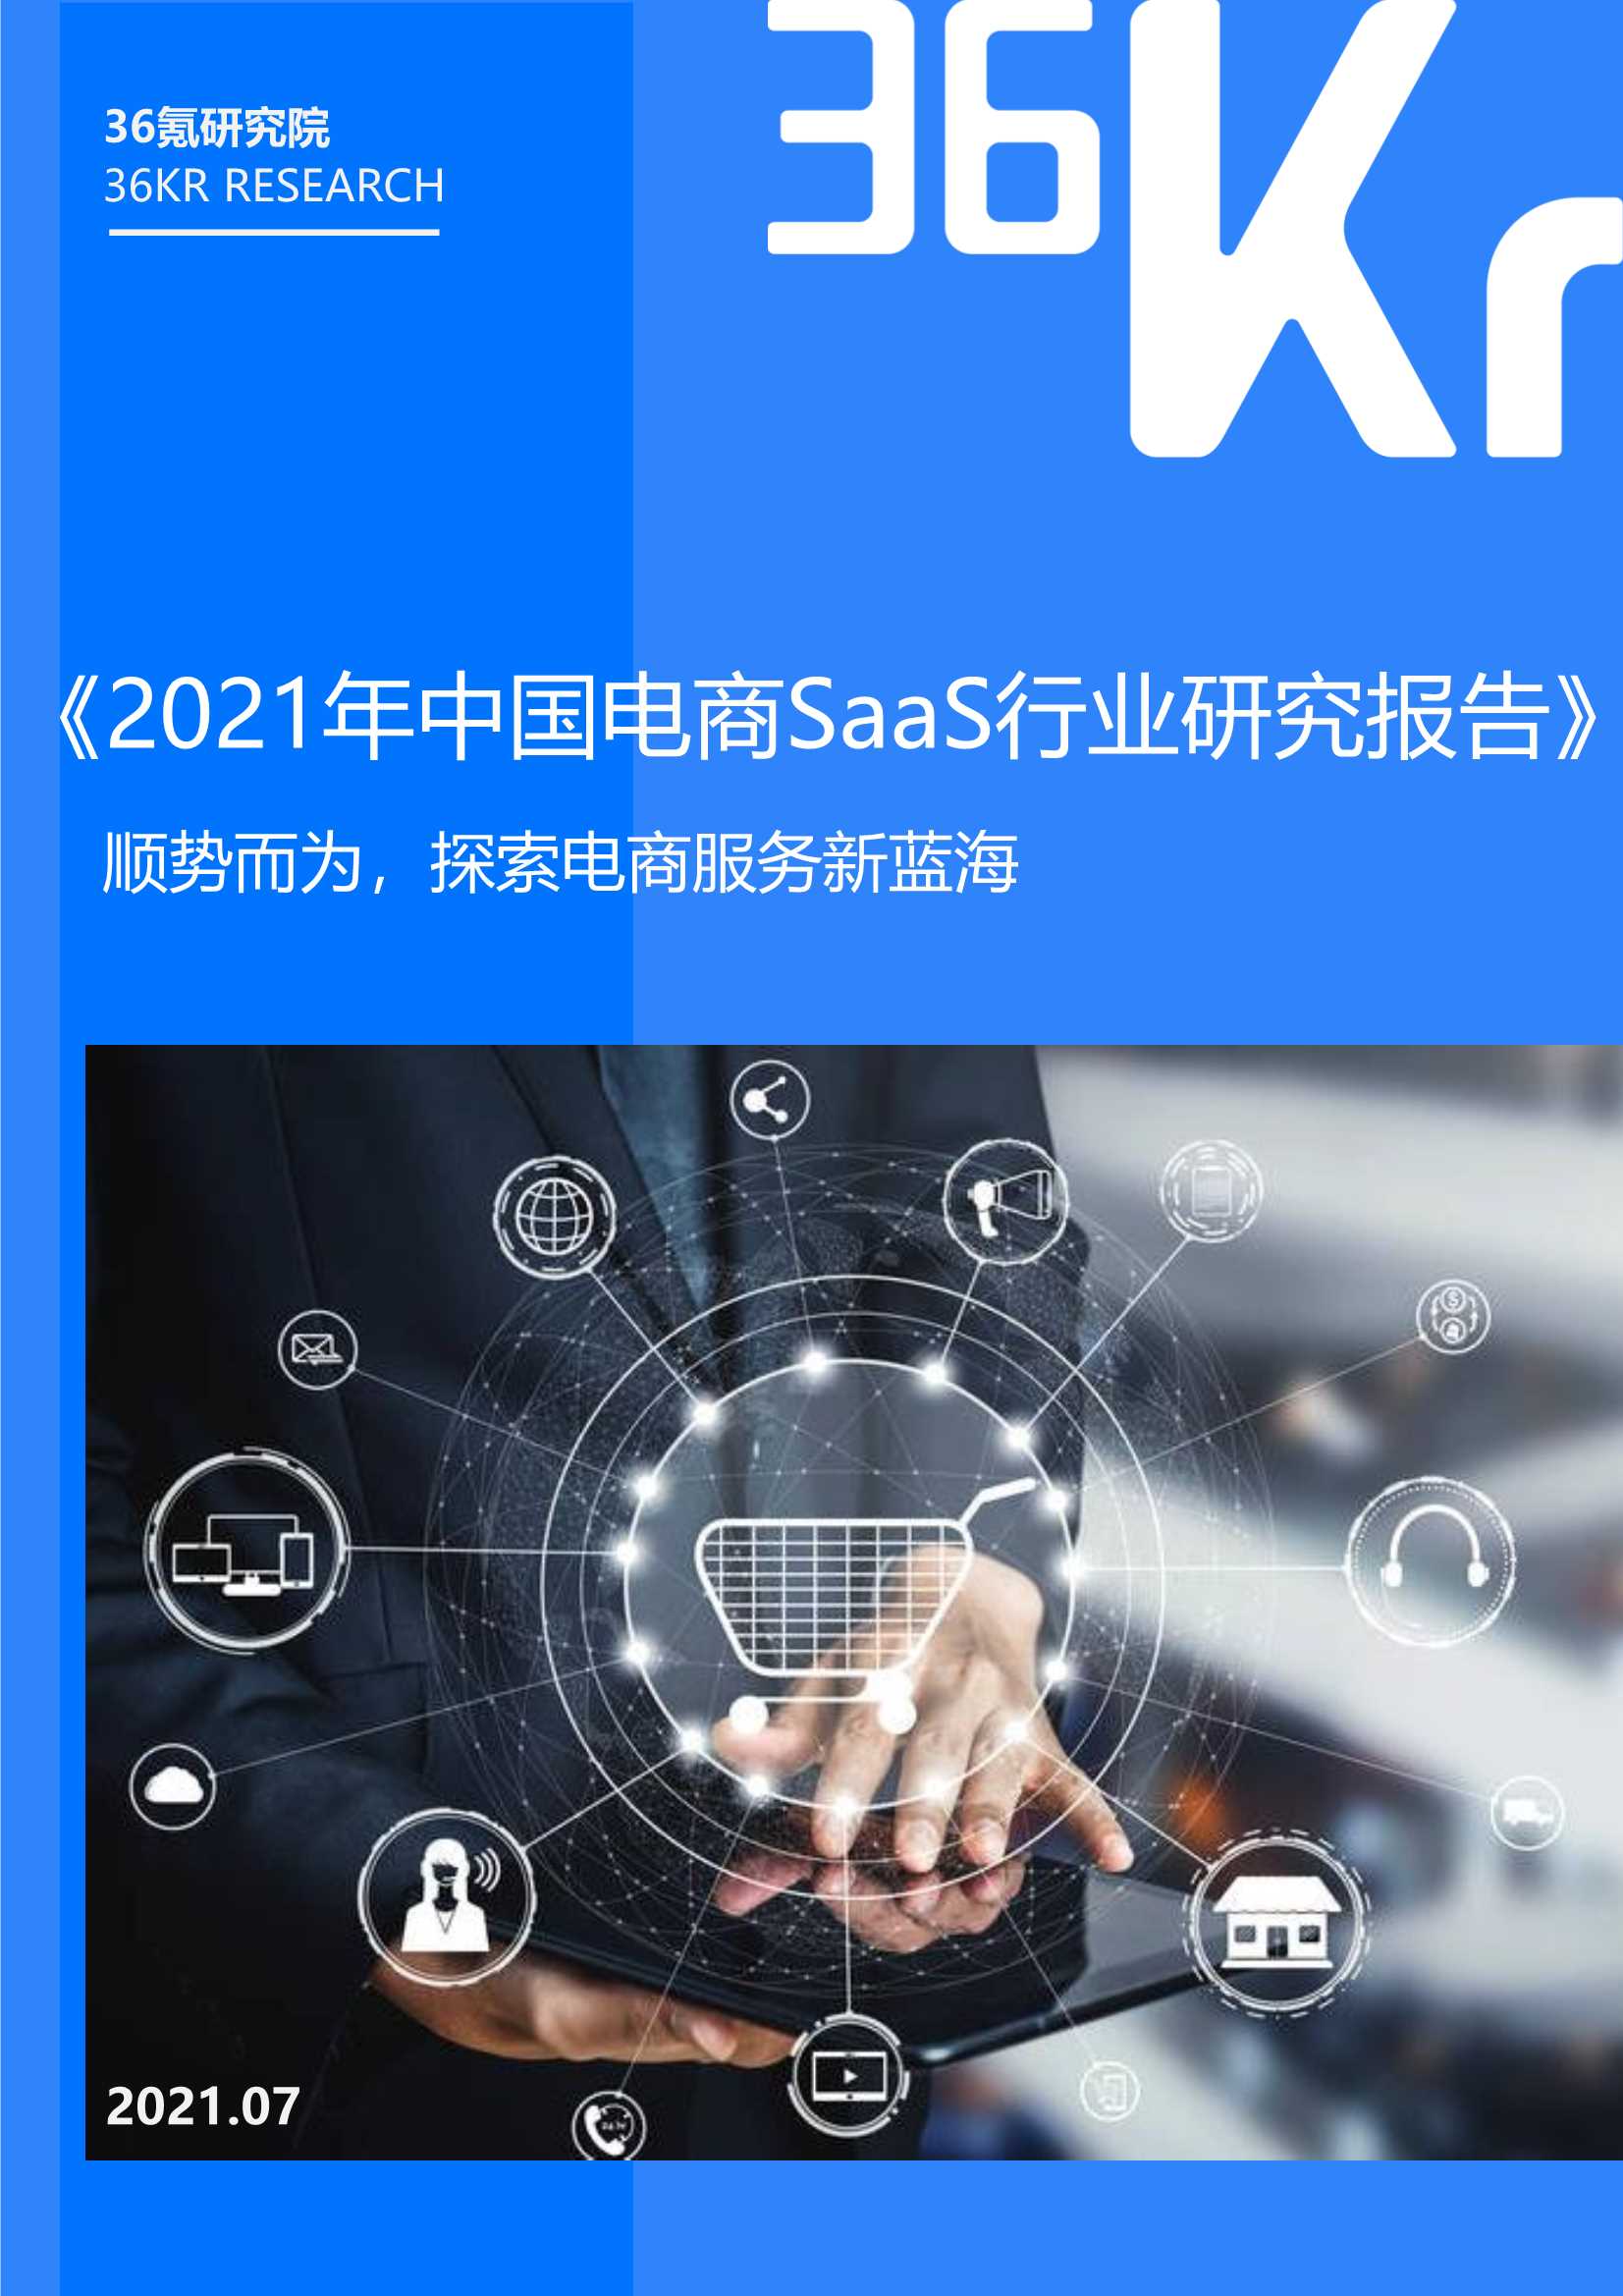 36Kr-2021年中国电商SaaS行业研究报告-2021.07-35页